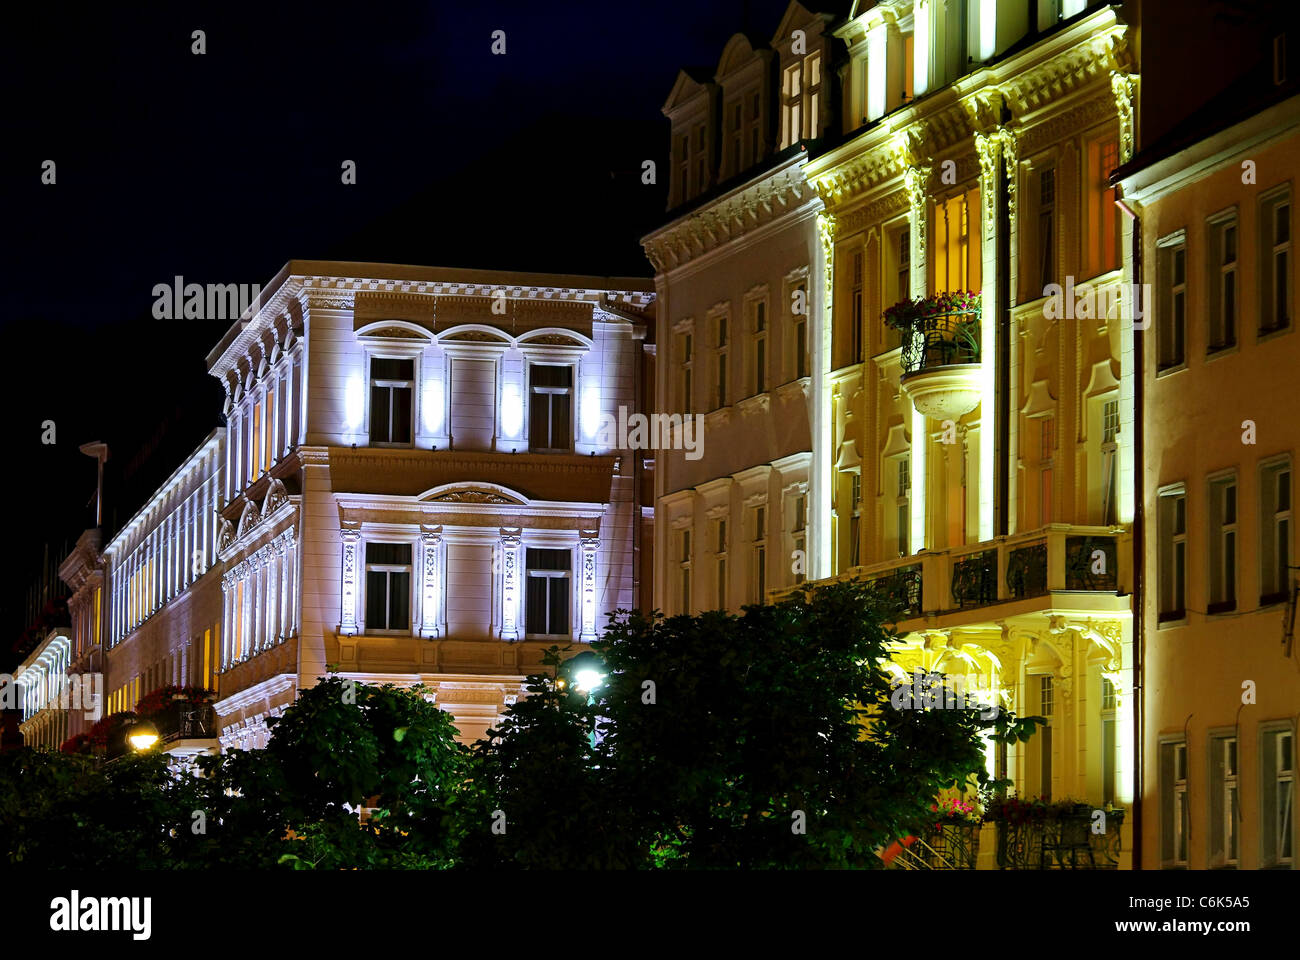 Karlovy Vary Hausfassaden Nacht - Karlovy Vary facade by night 01 Stock Photo